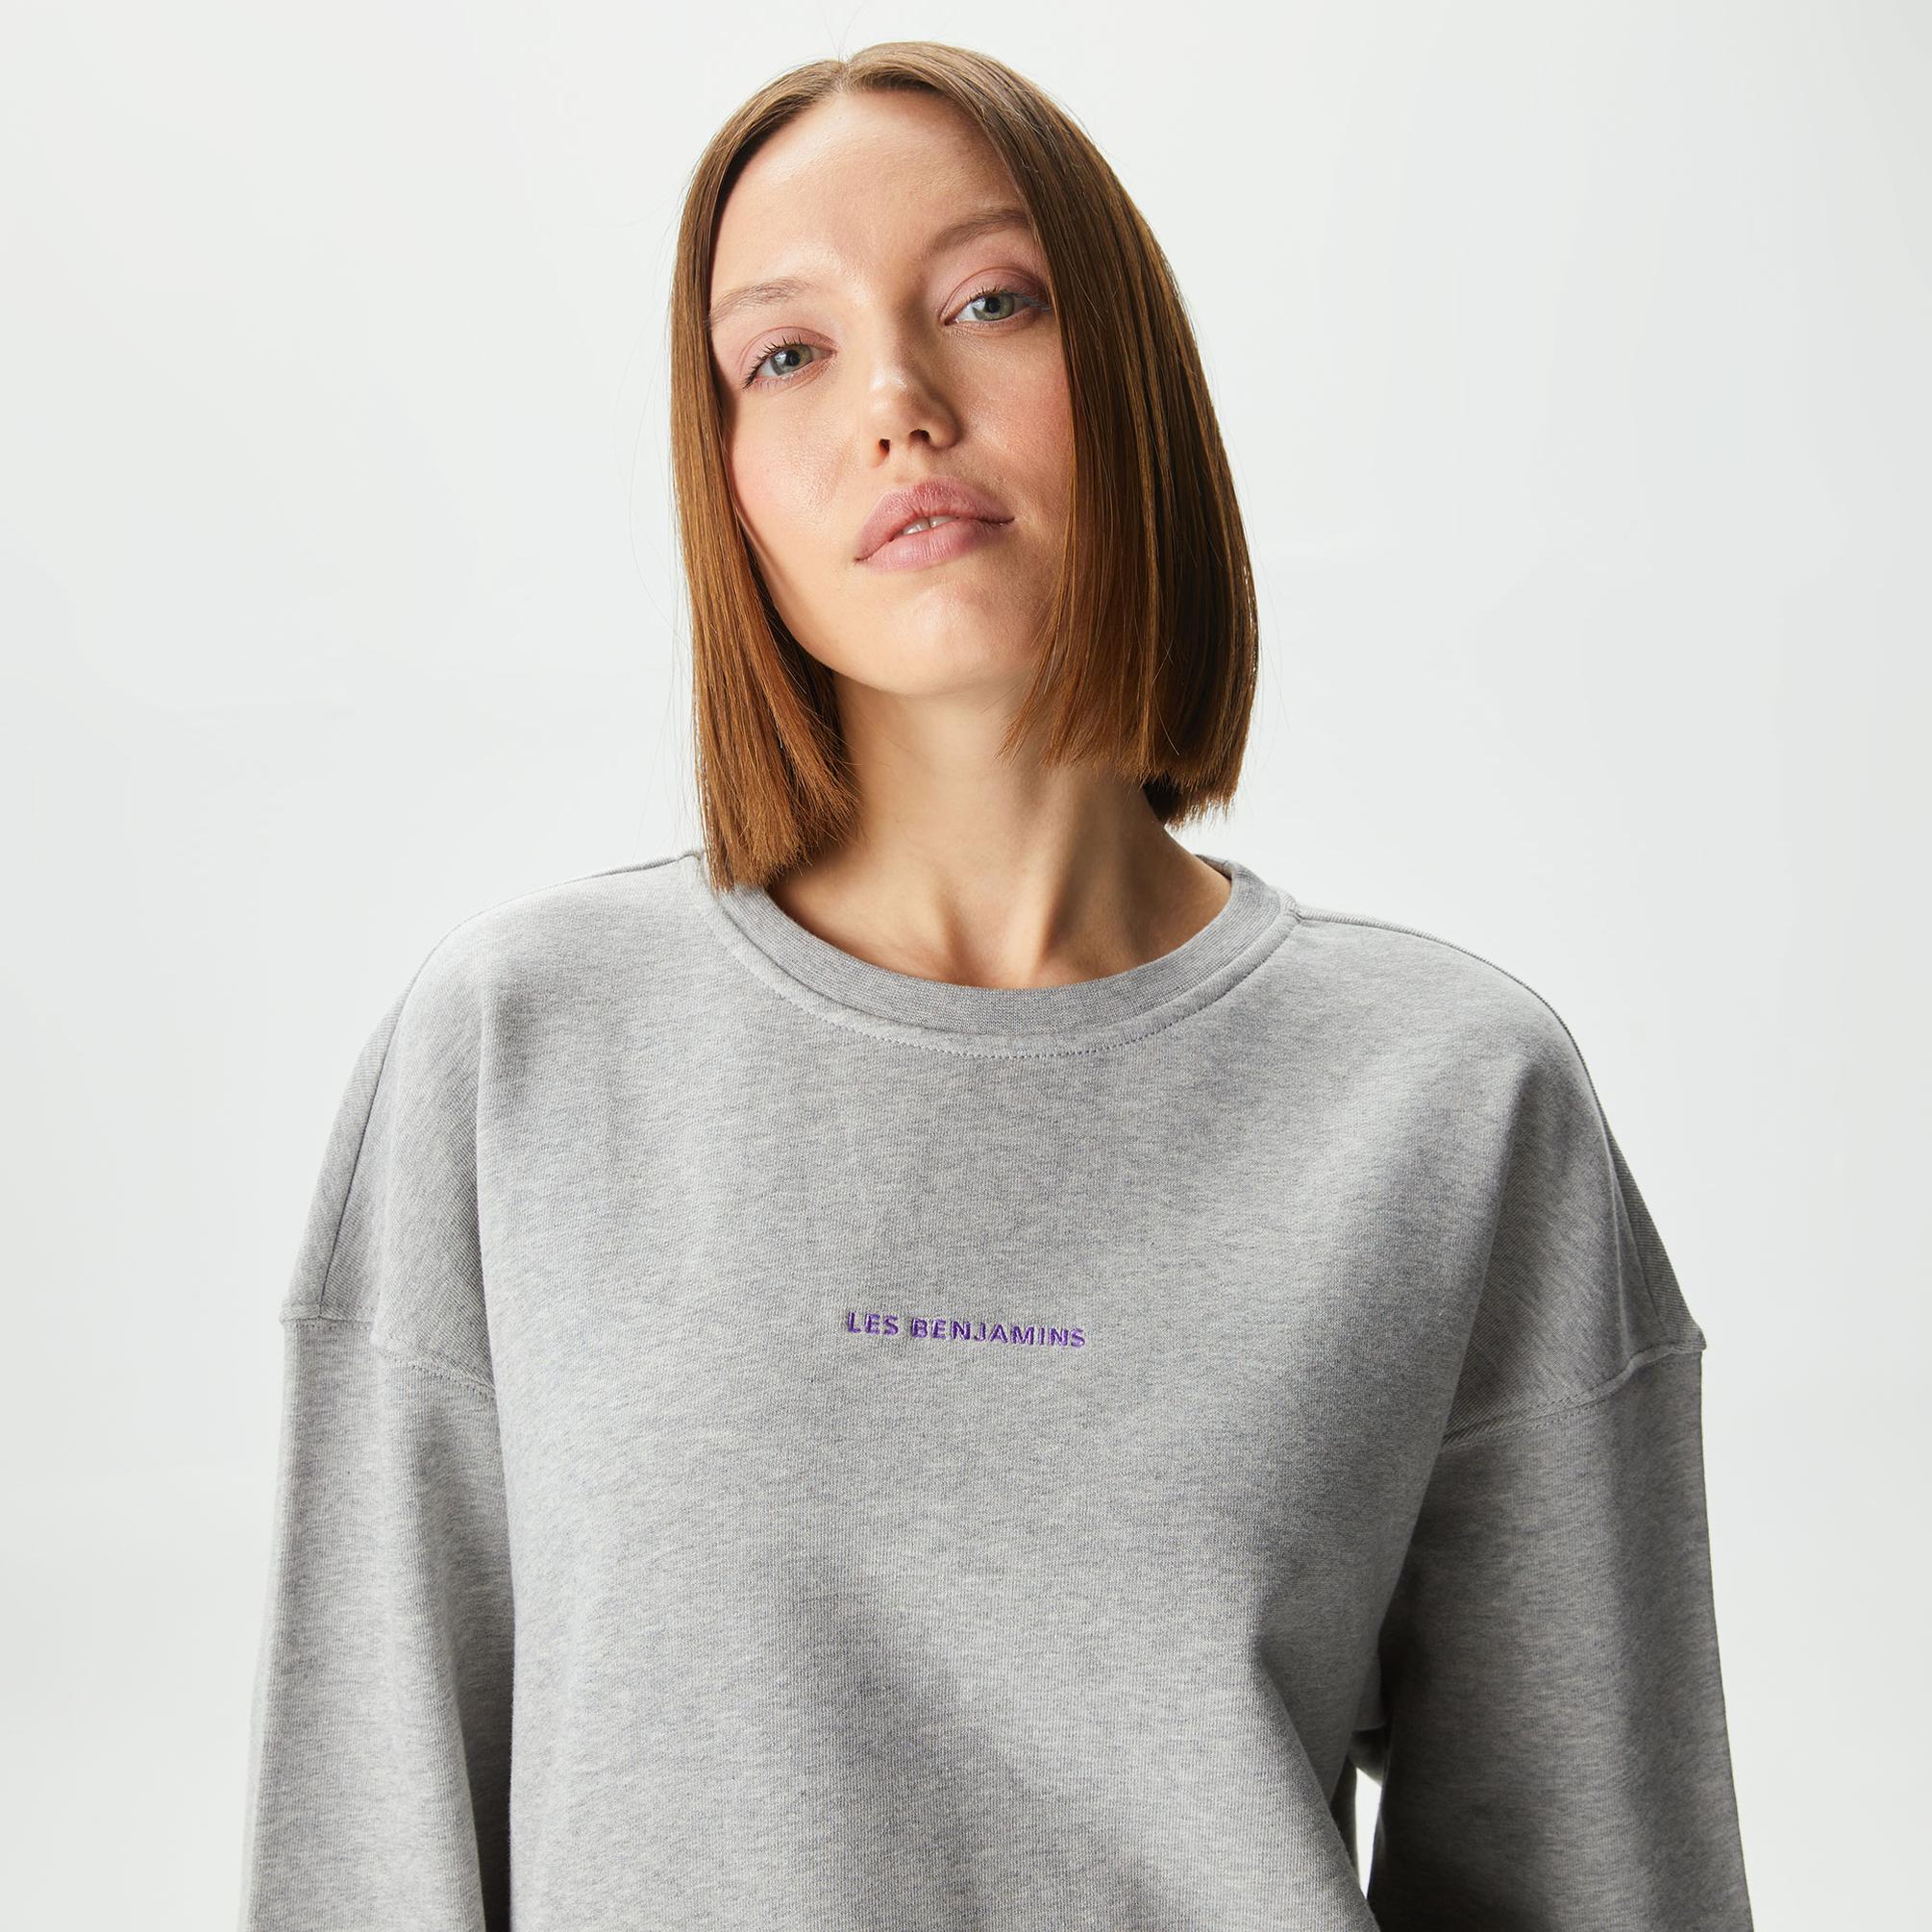  Les Benjamins Core Kadın Gri Sweatshirt